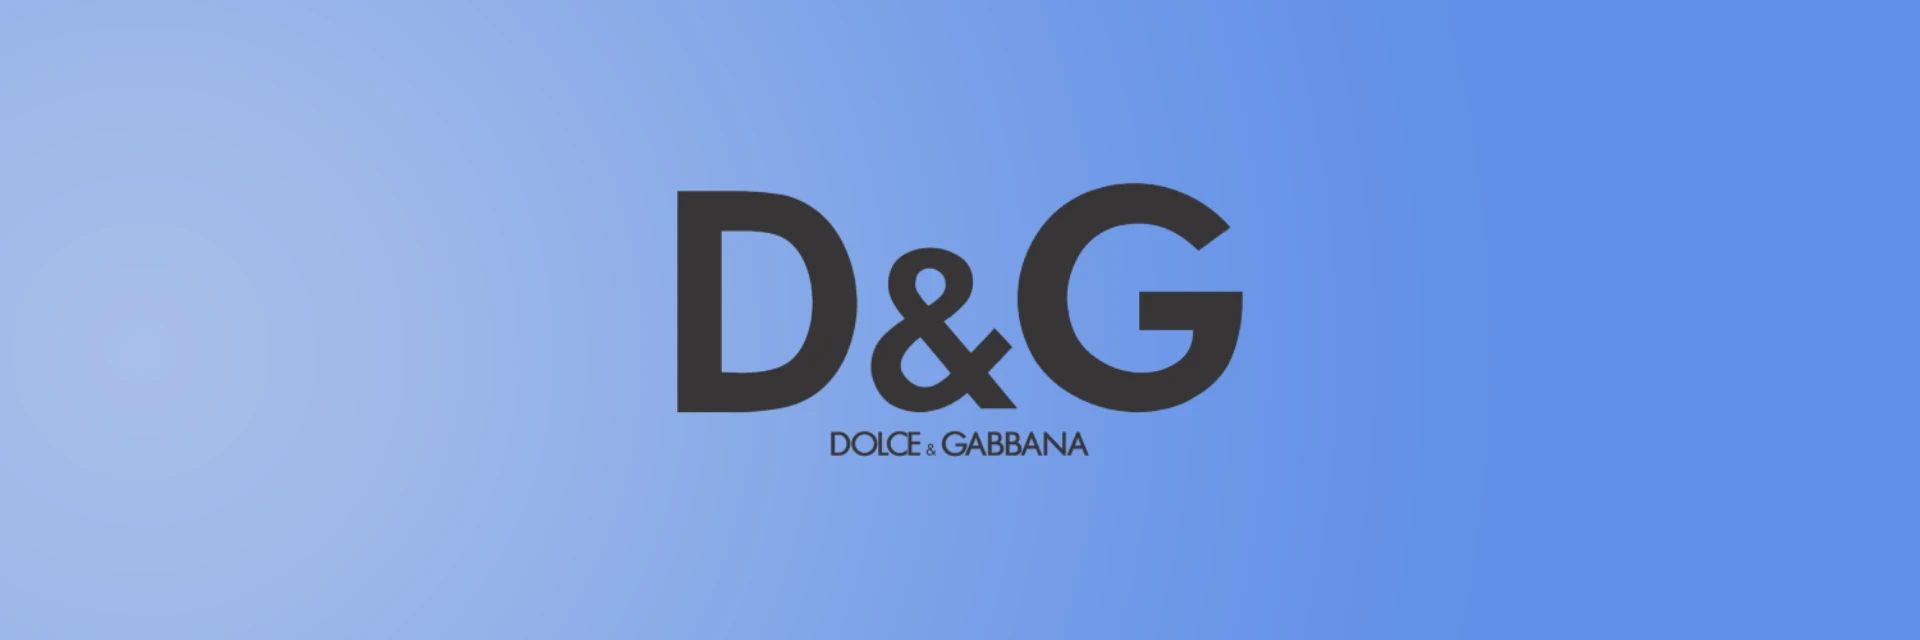 Dolce & Gabbana perfume brand banner image